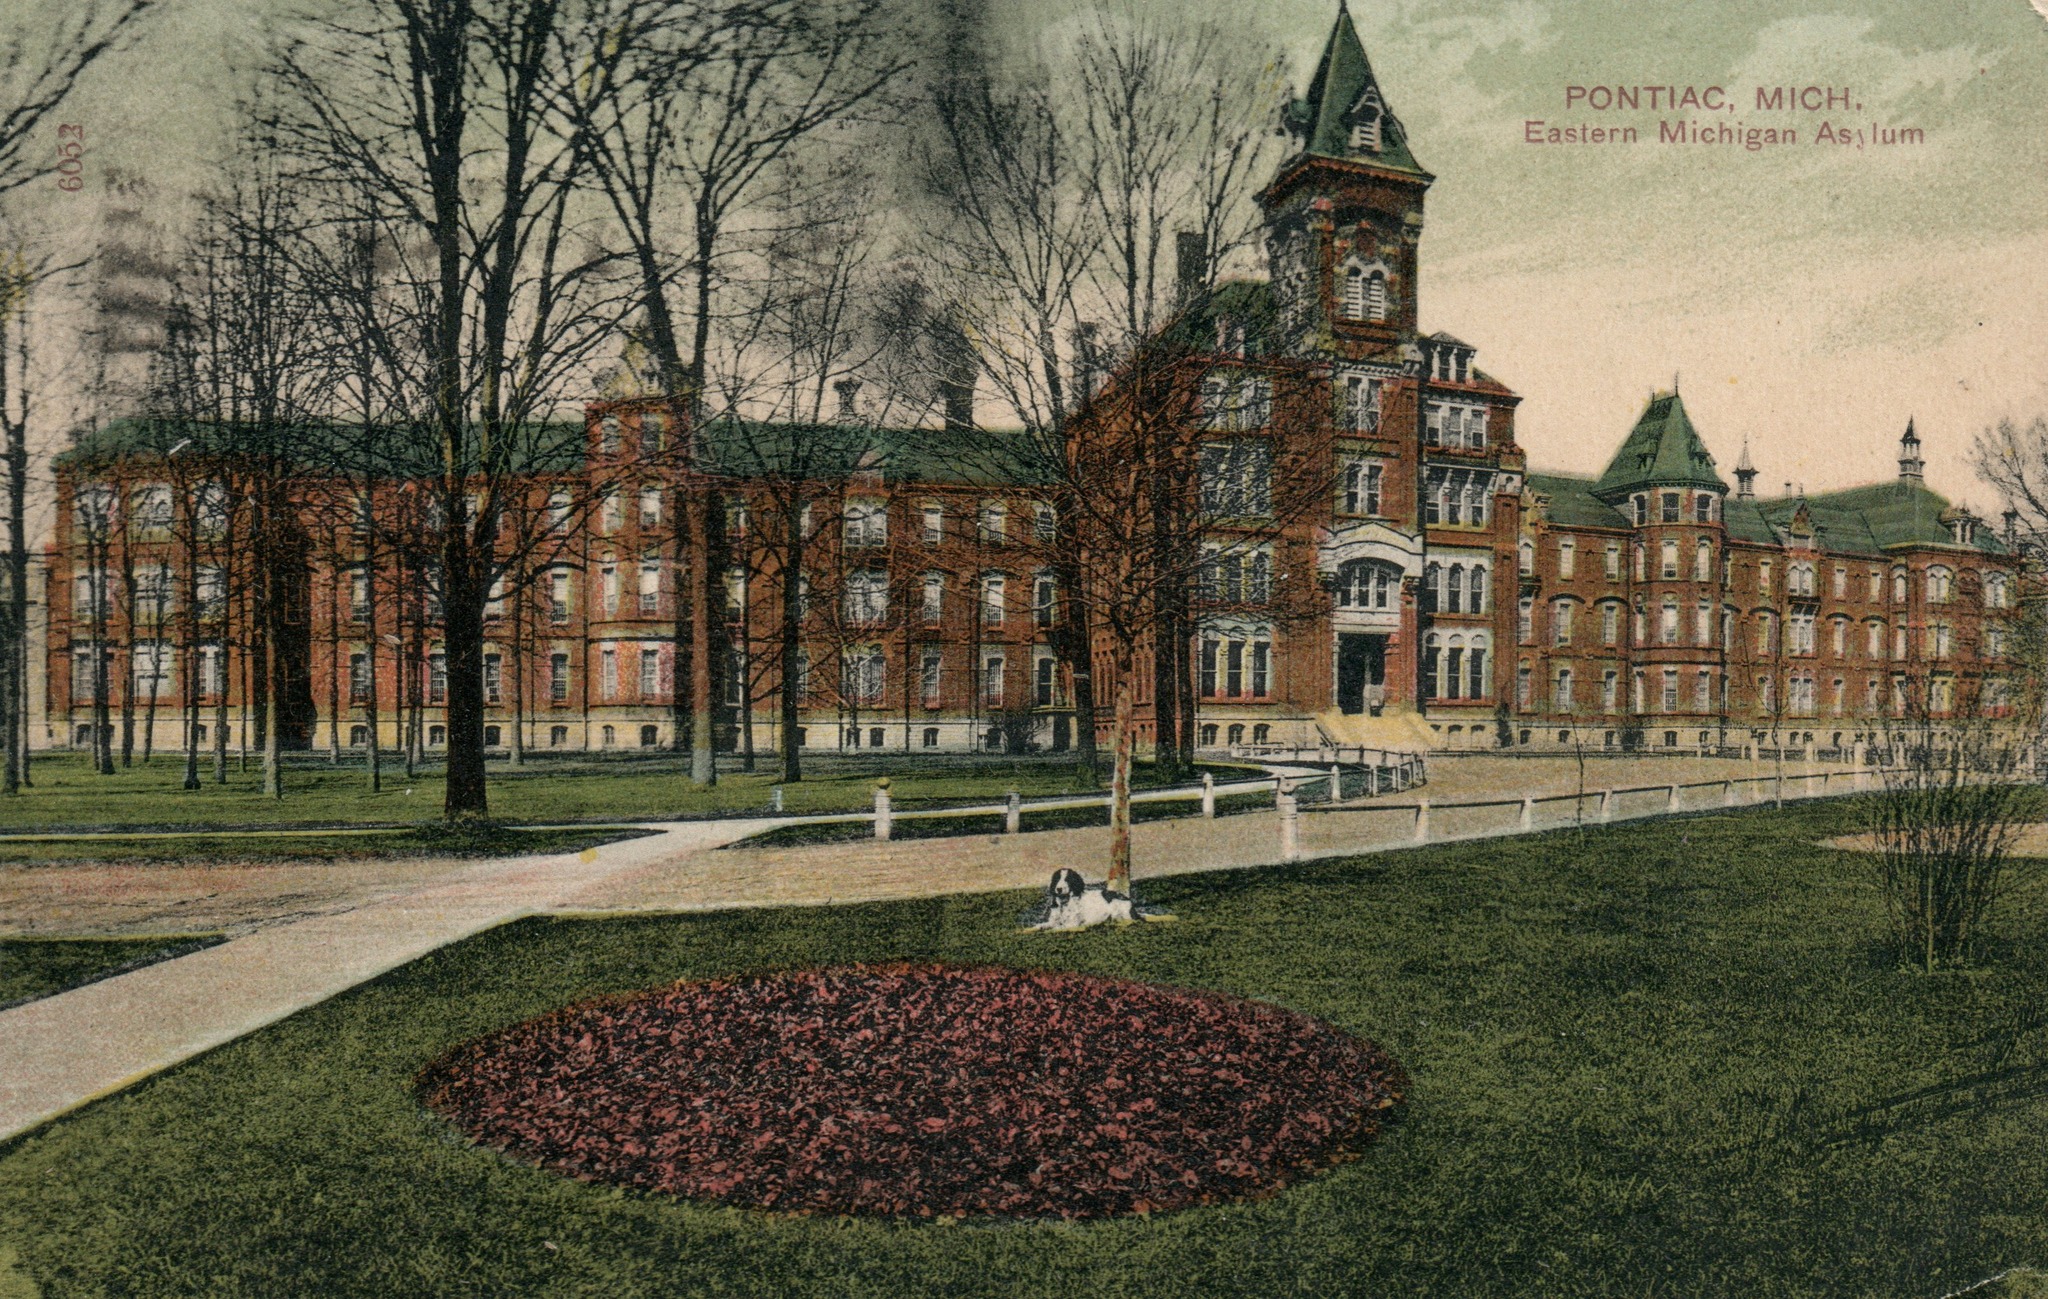 Eastern Michigan Asylum in 1907